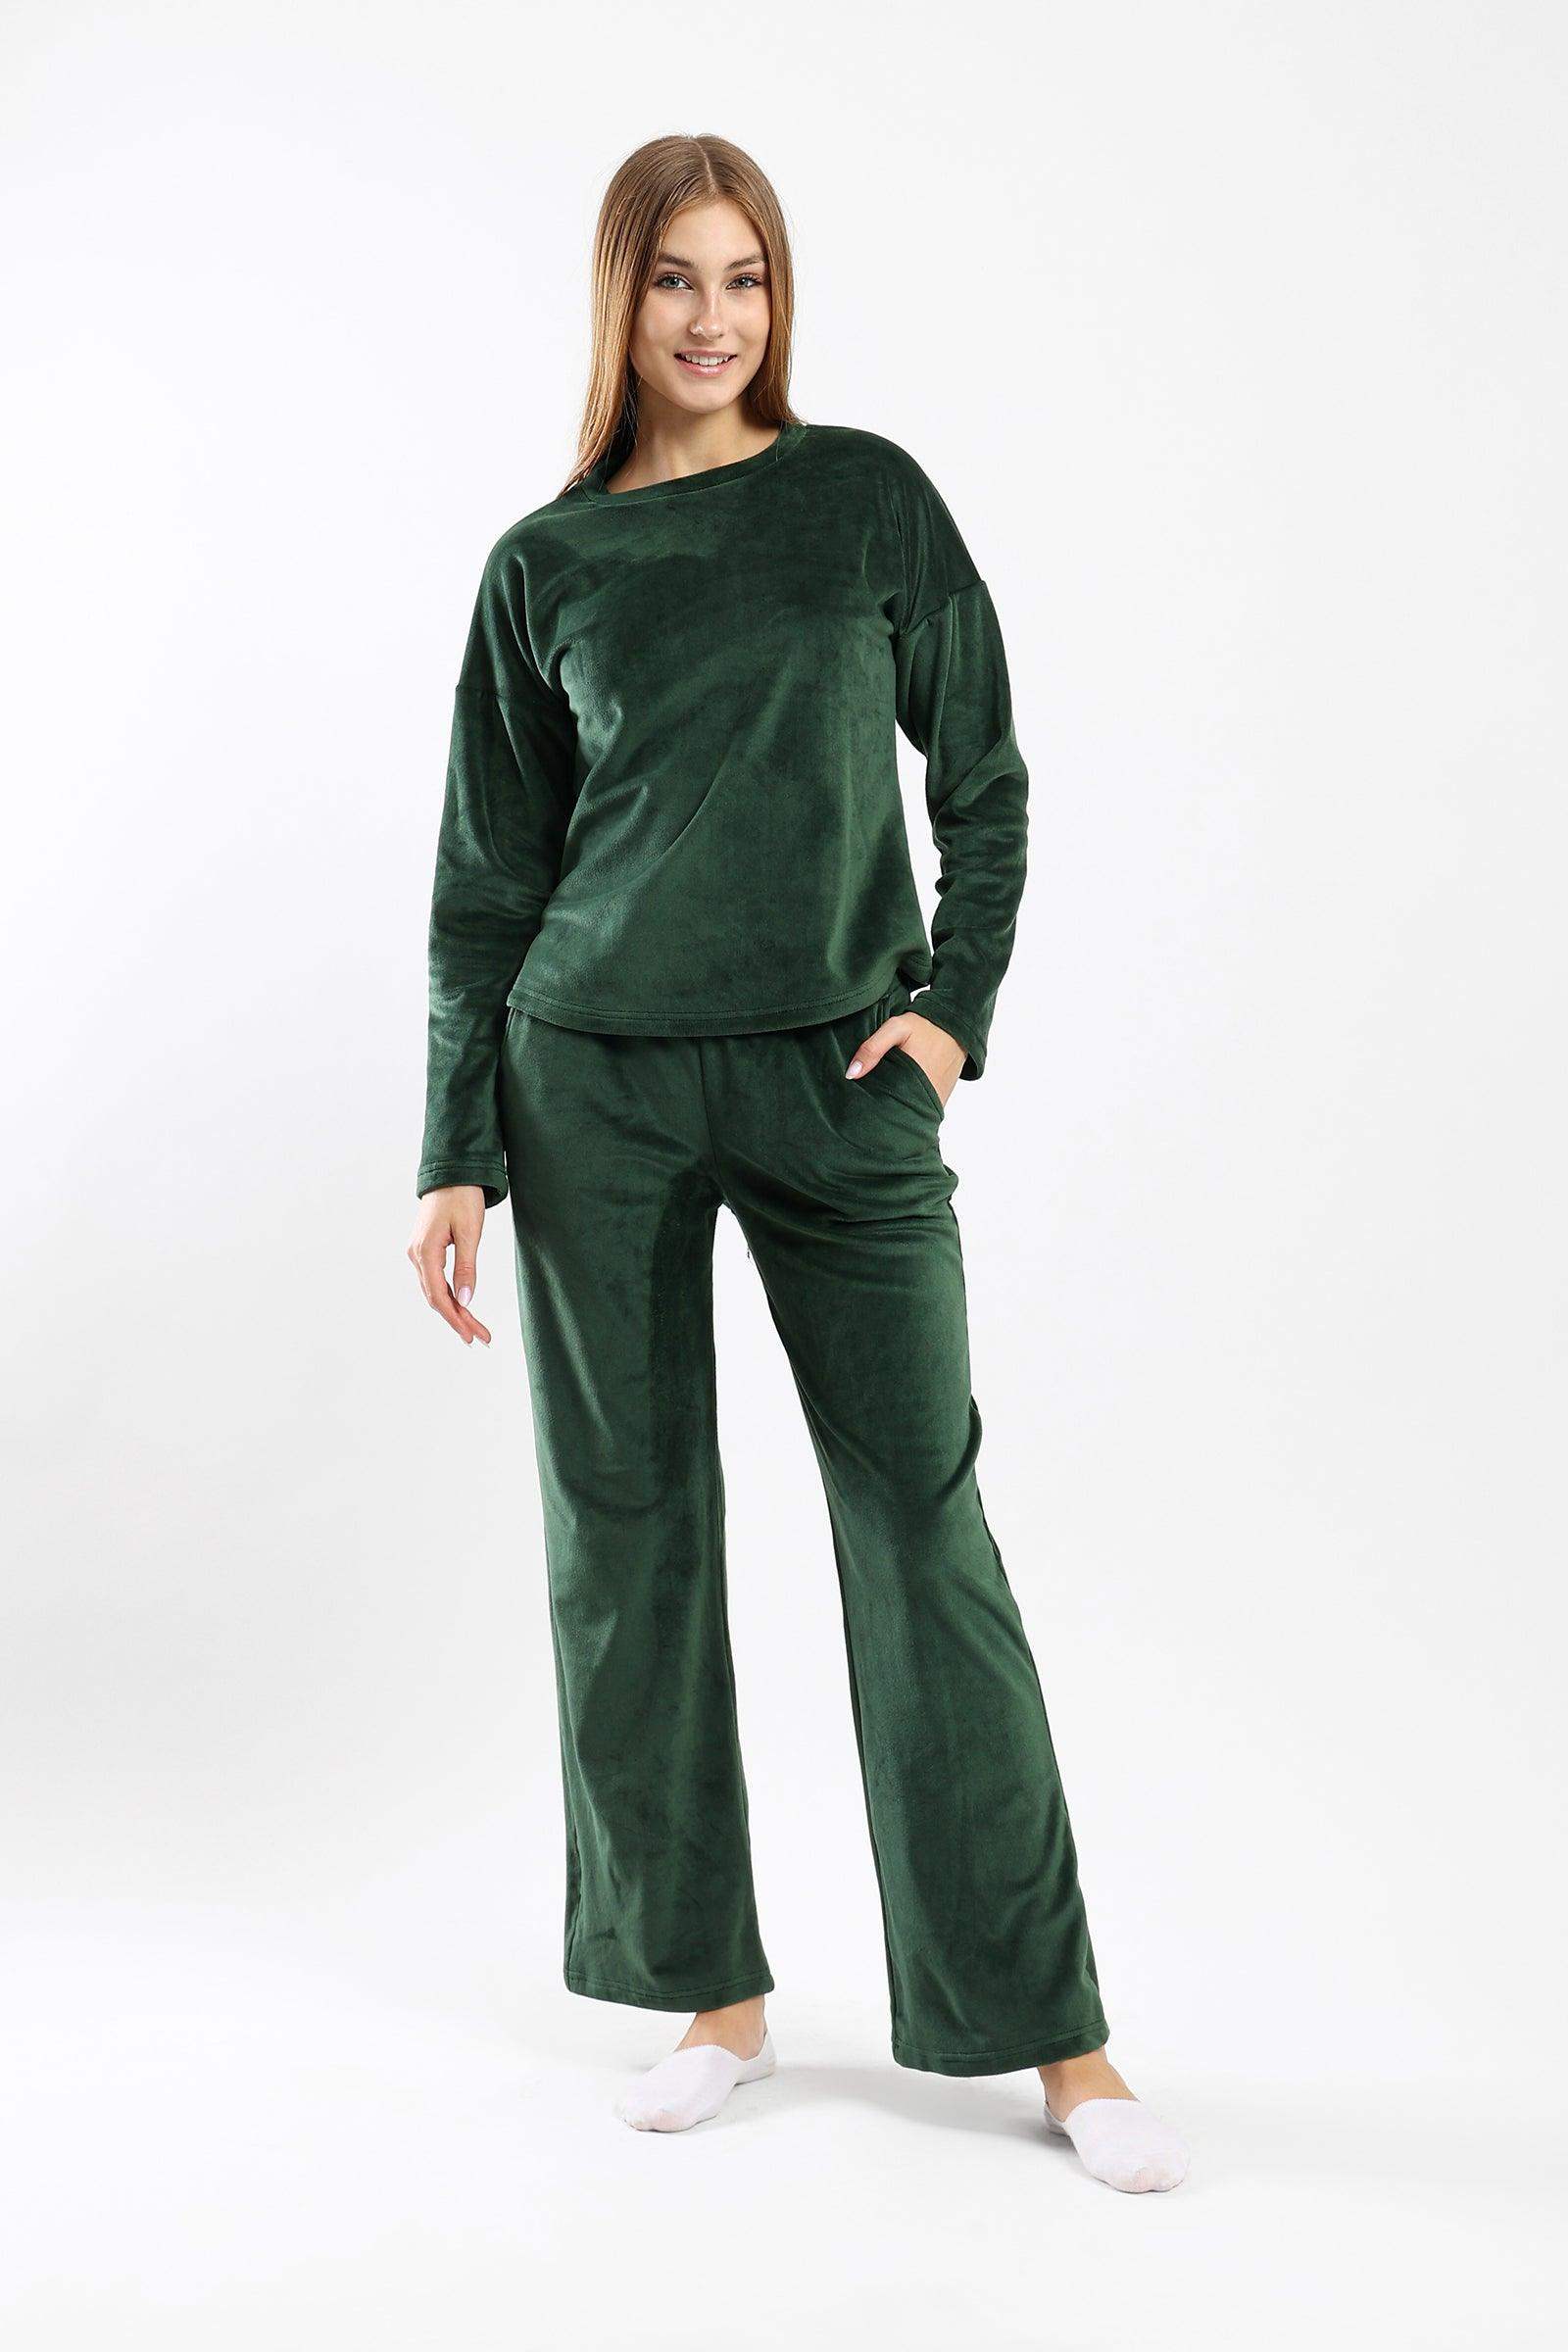 Fleece Solid Pyjama Set - Carina - كارينا